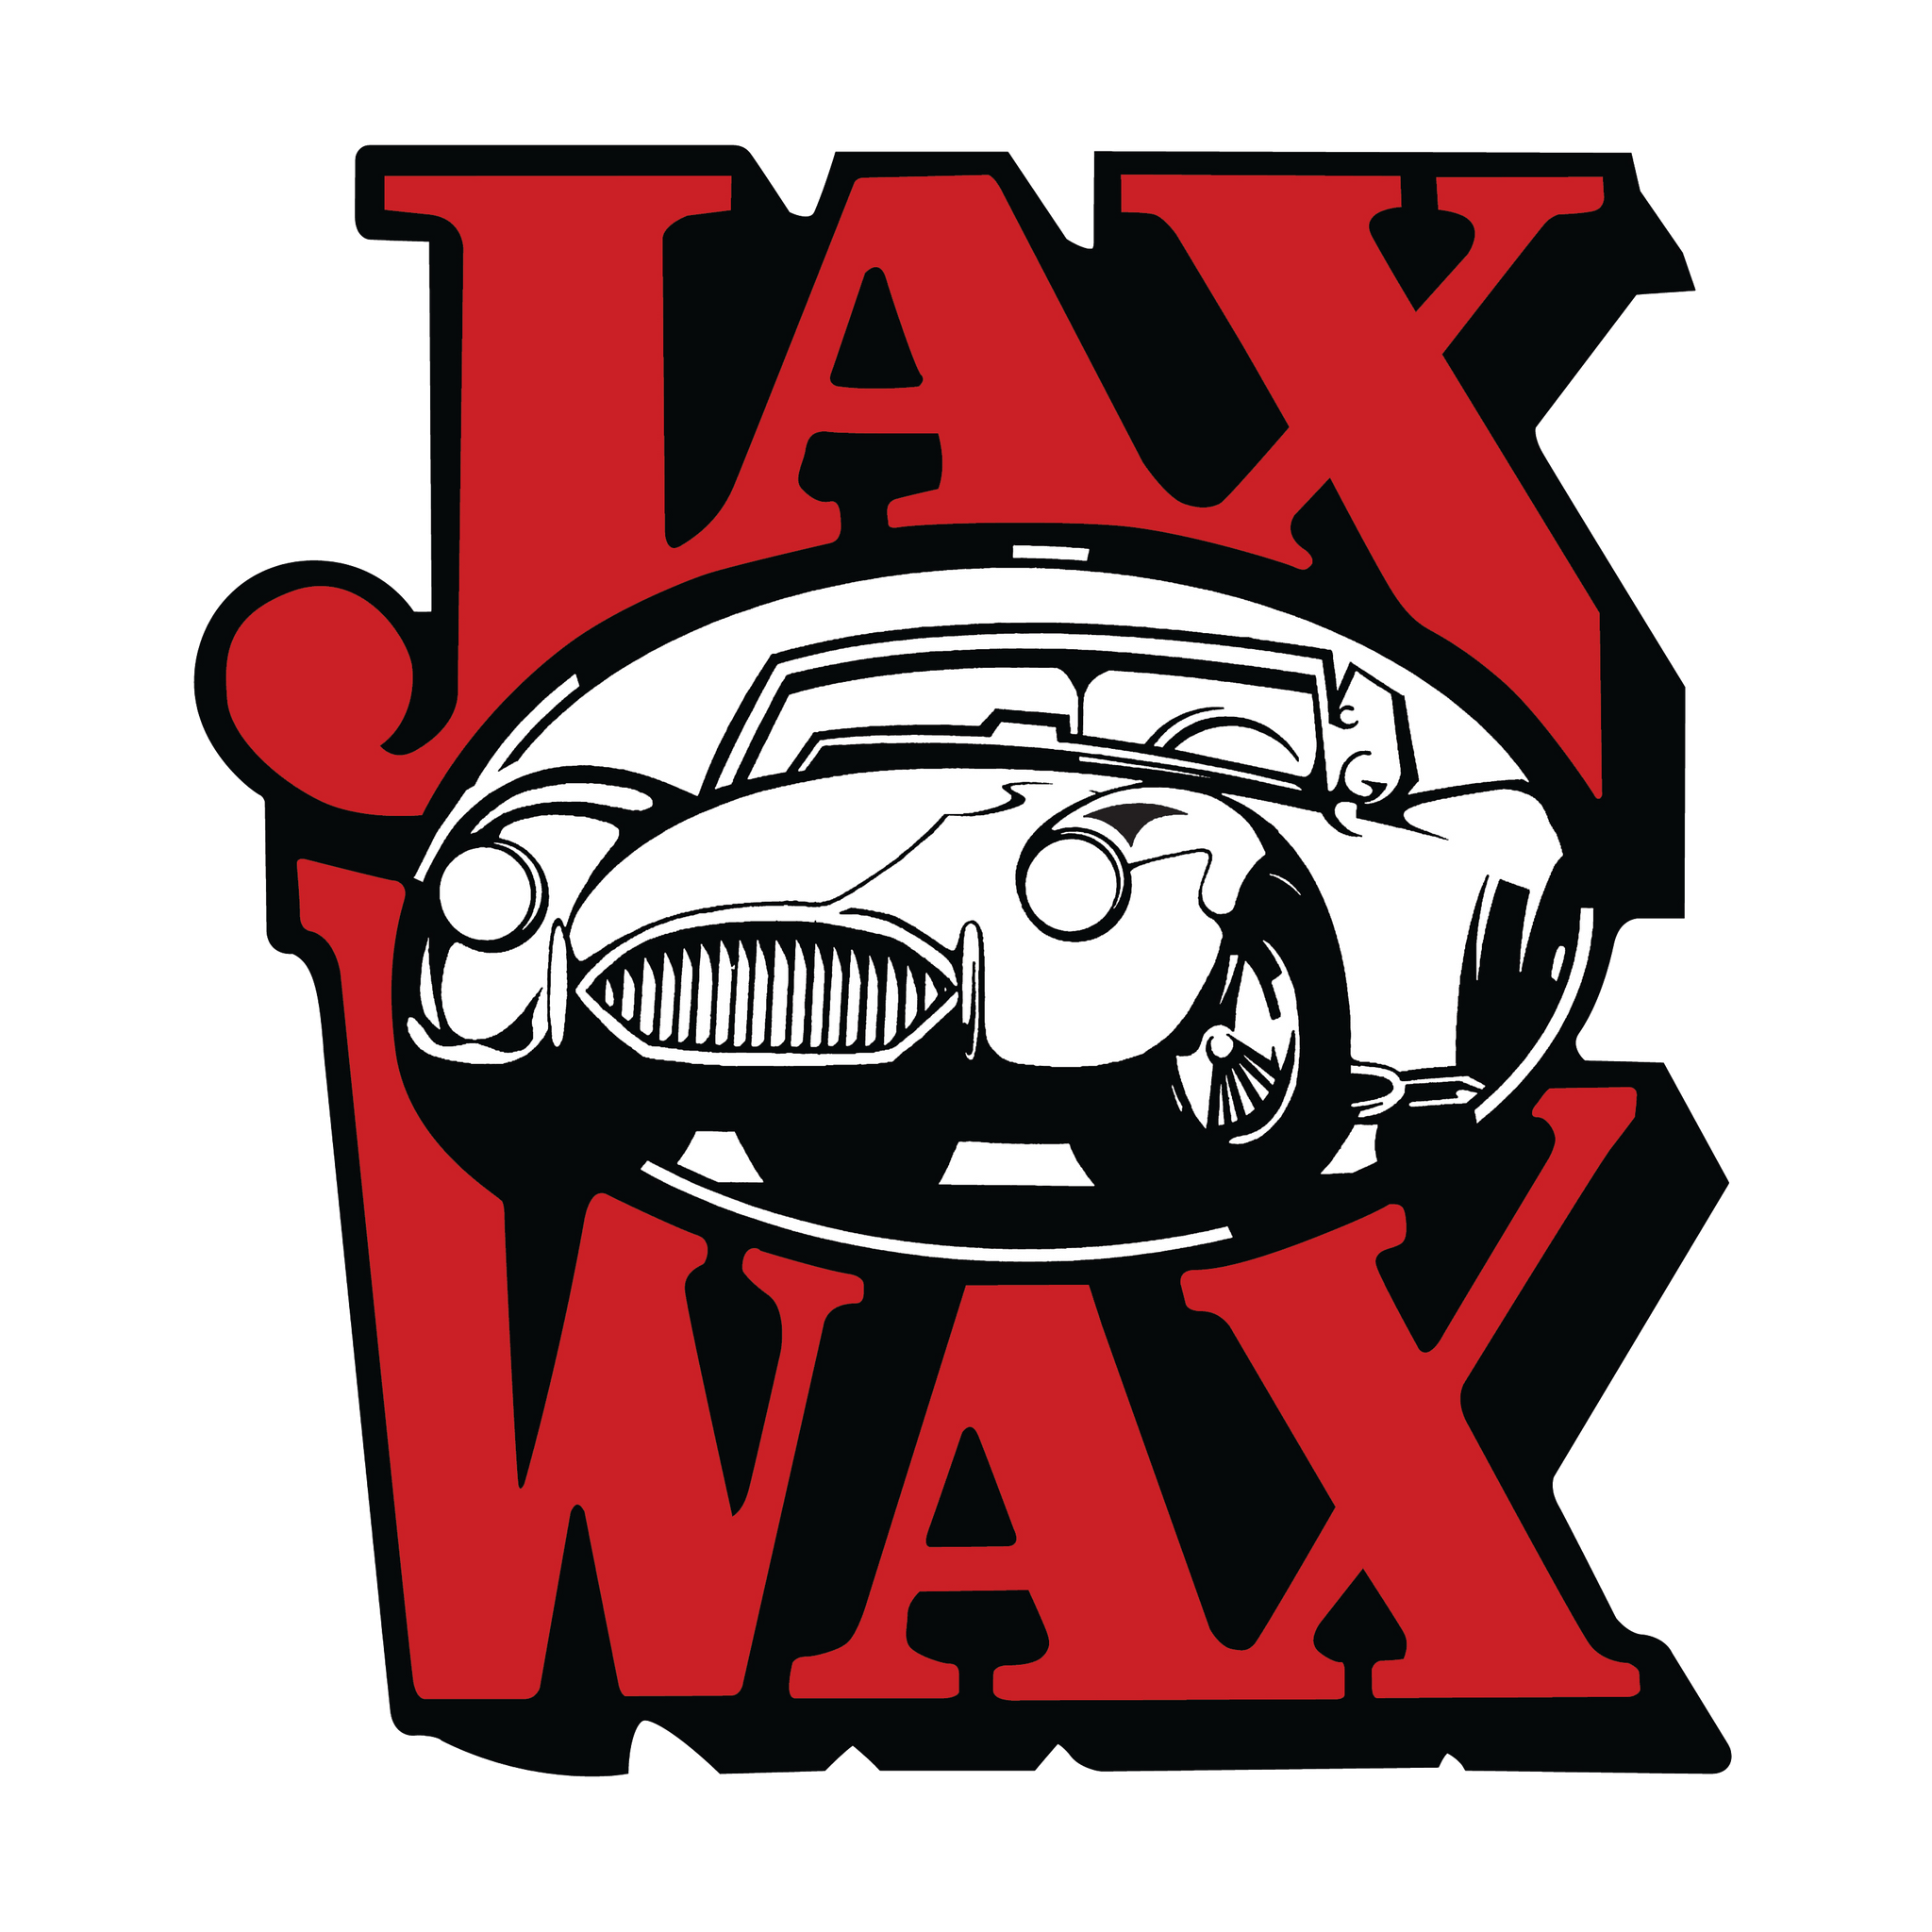 Sealing Wax Pieces – Jax Industrial Markers